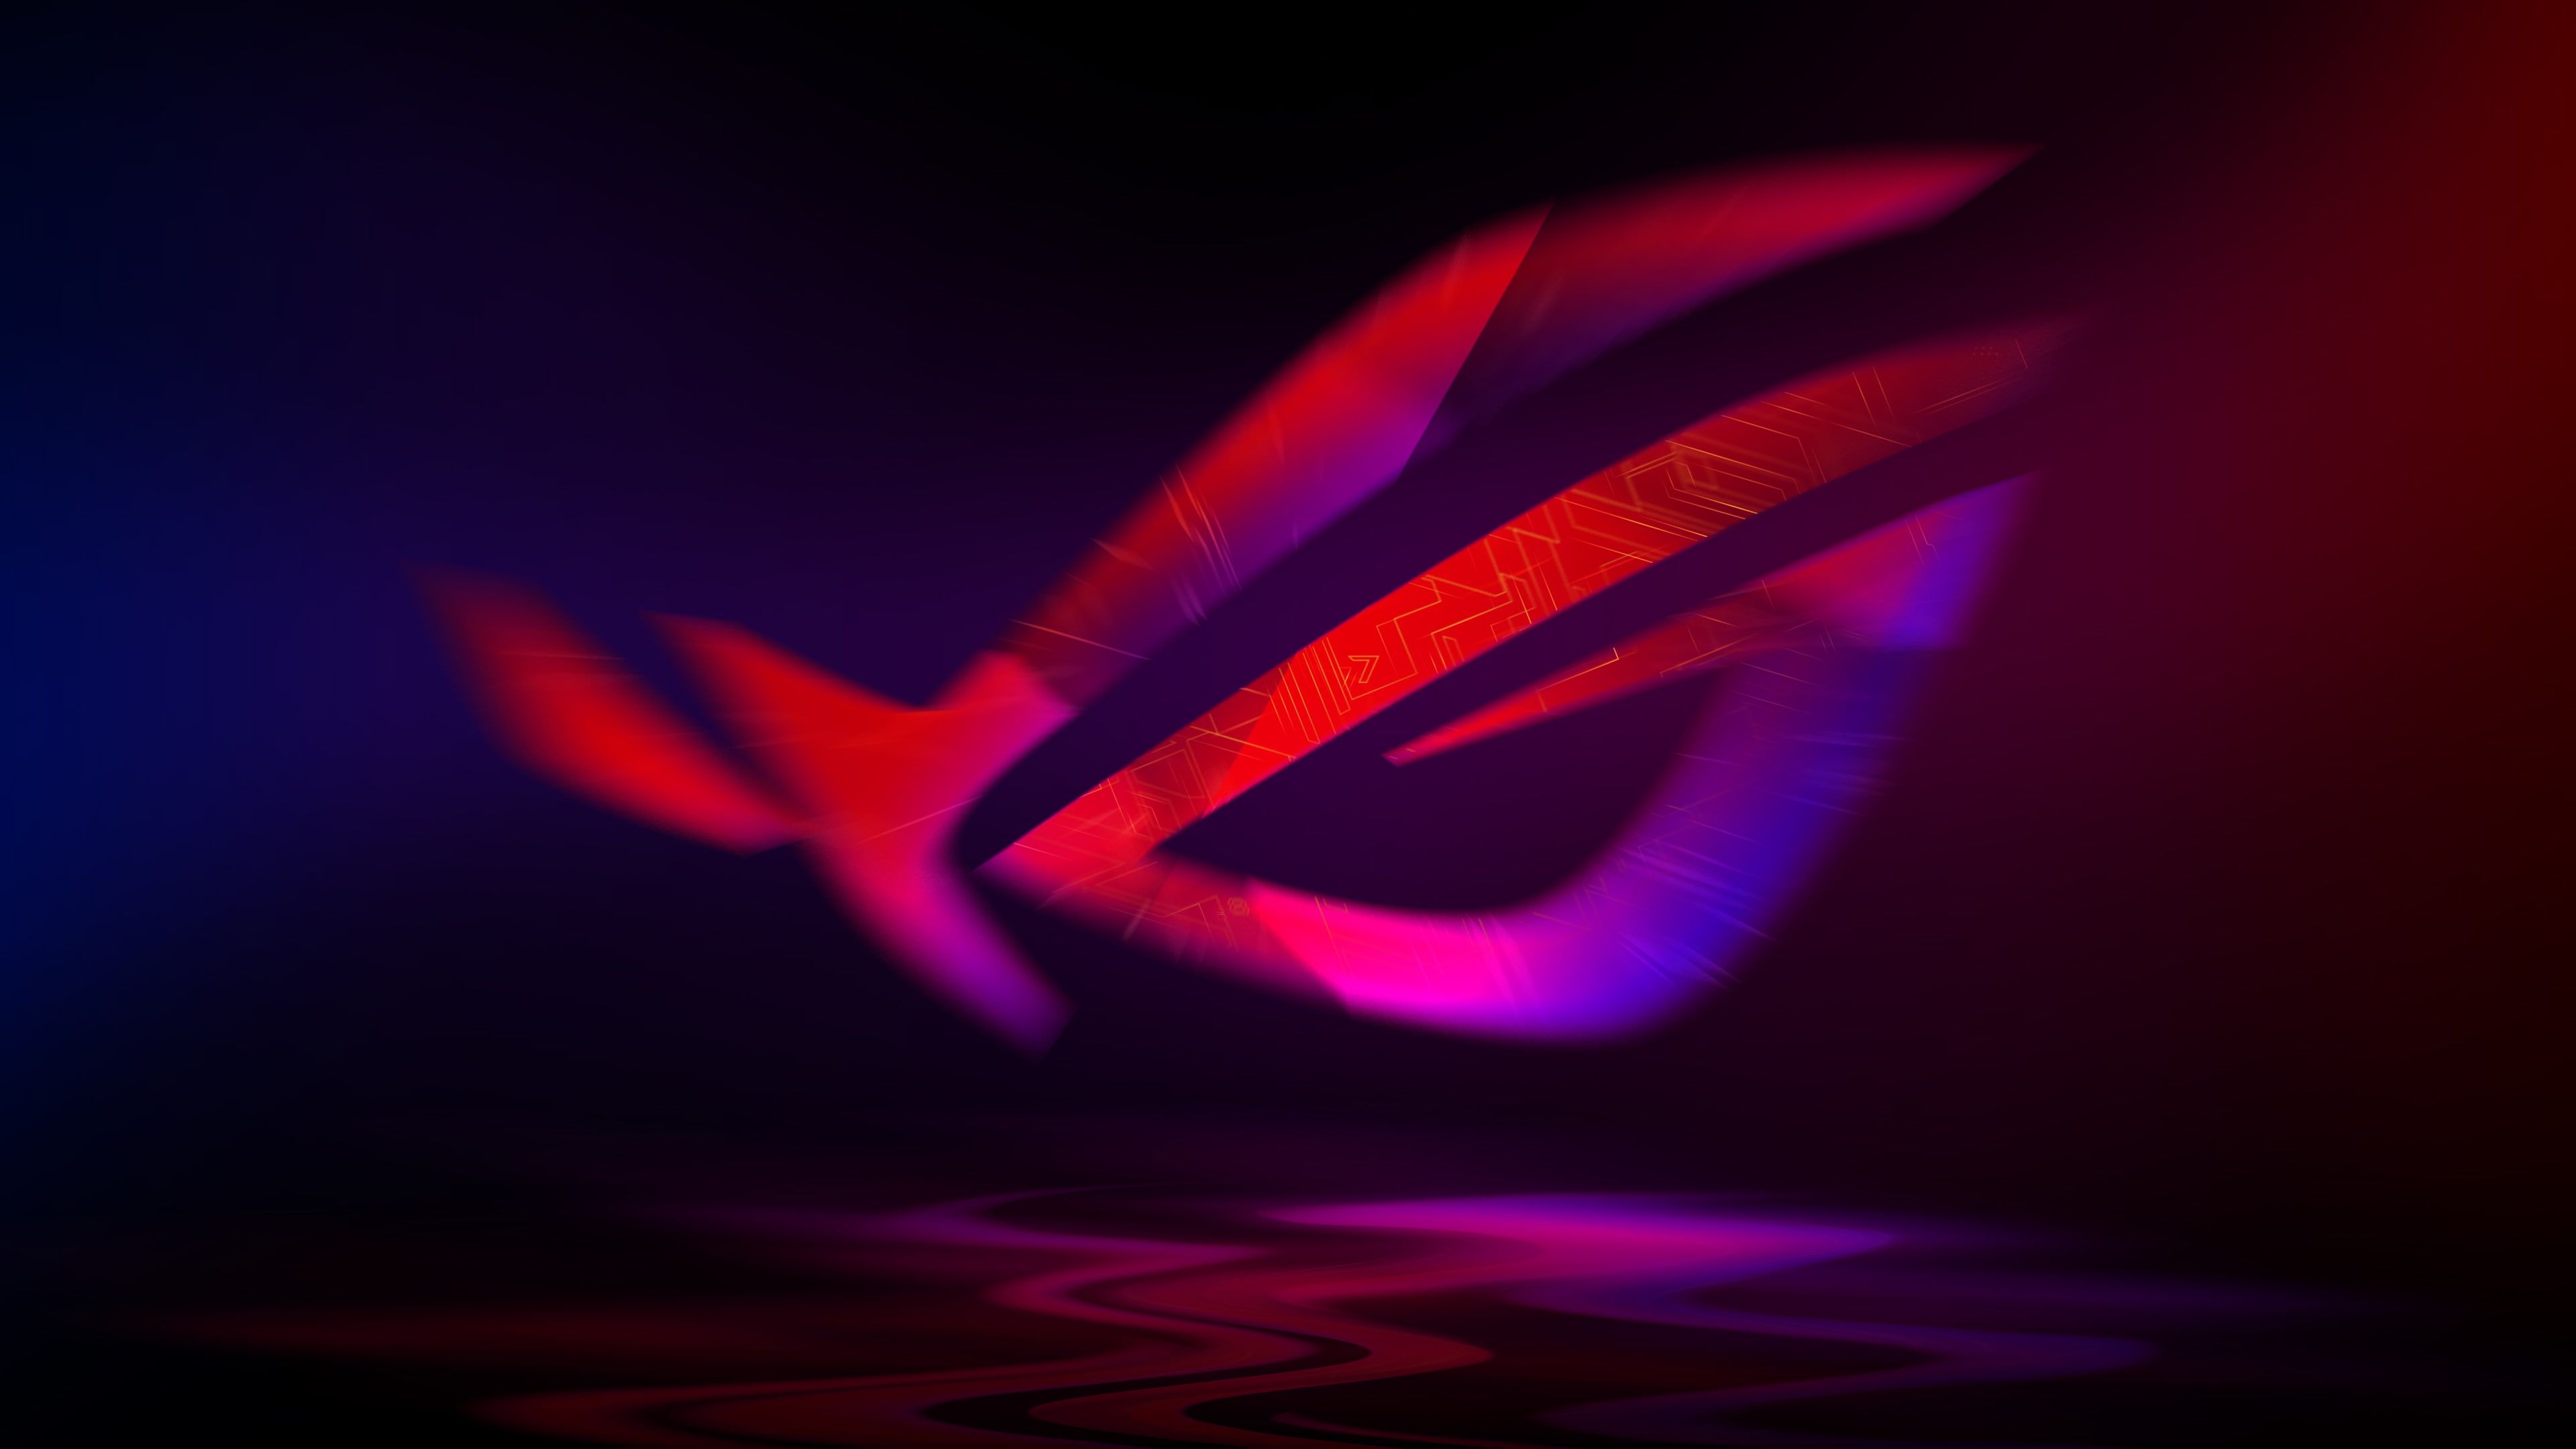 ASUS ROG #Neon K K #wallpaper #hdwallpaper #desktop. Neon wallpaper, Abstract logo, Asus